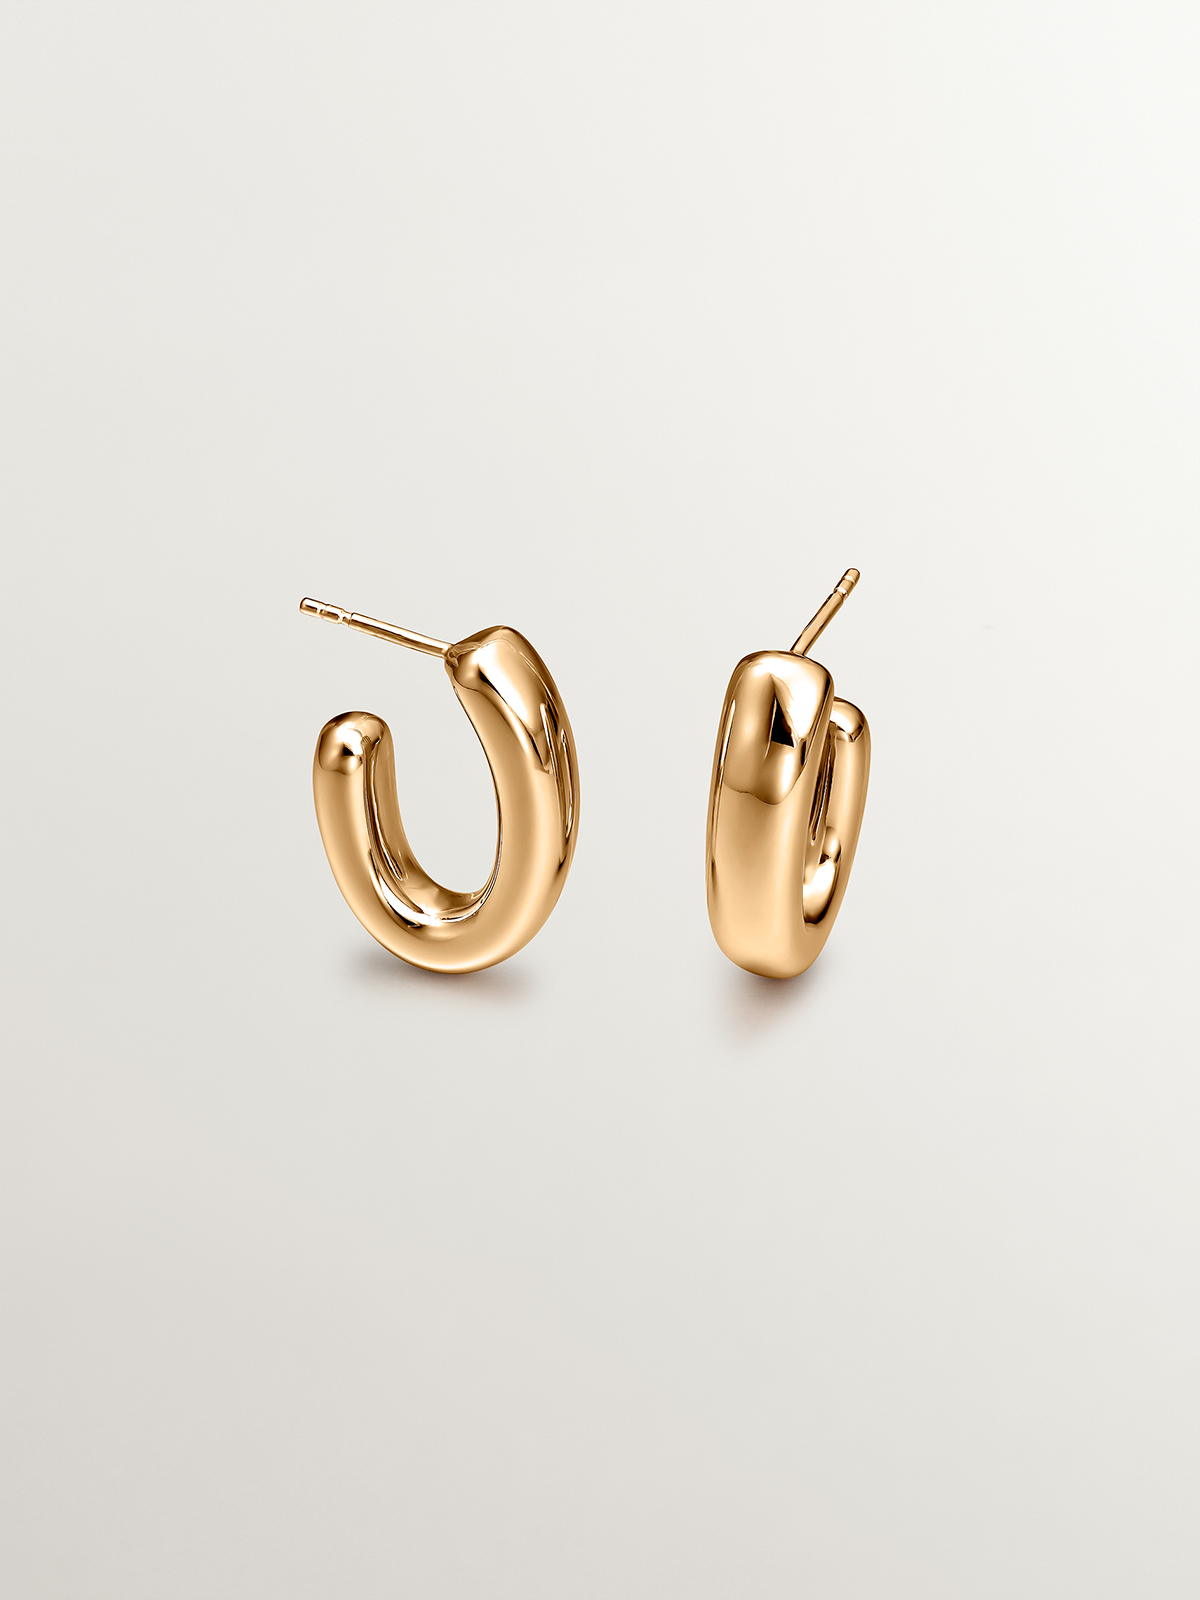 Small oval hoop earrings in 925 silver coated in 18K yellow gold